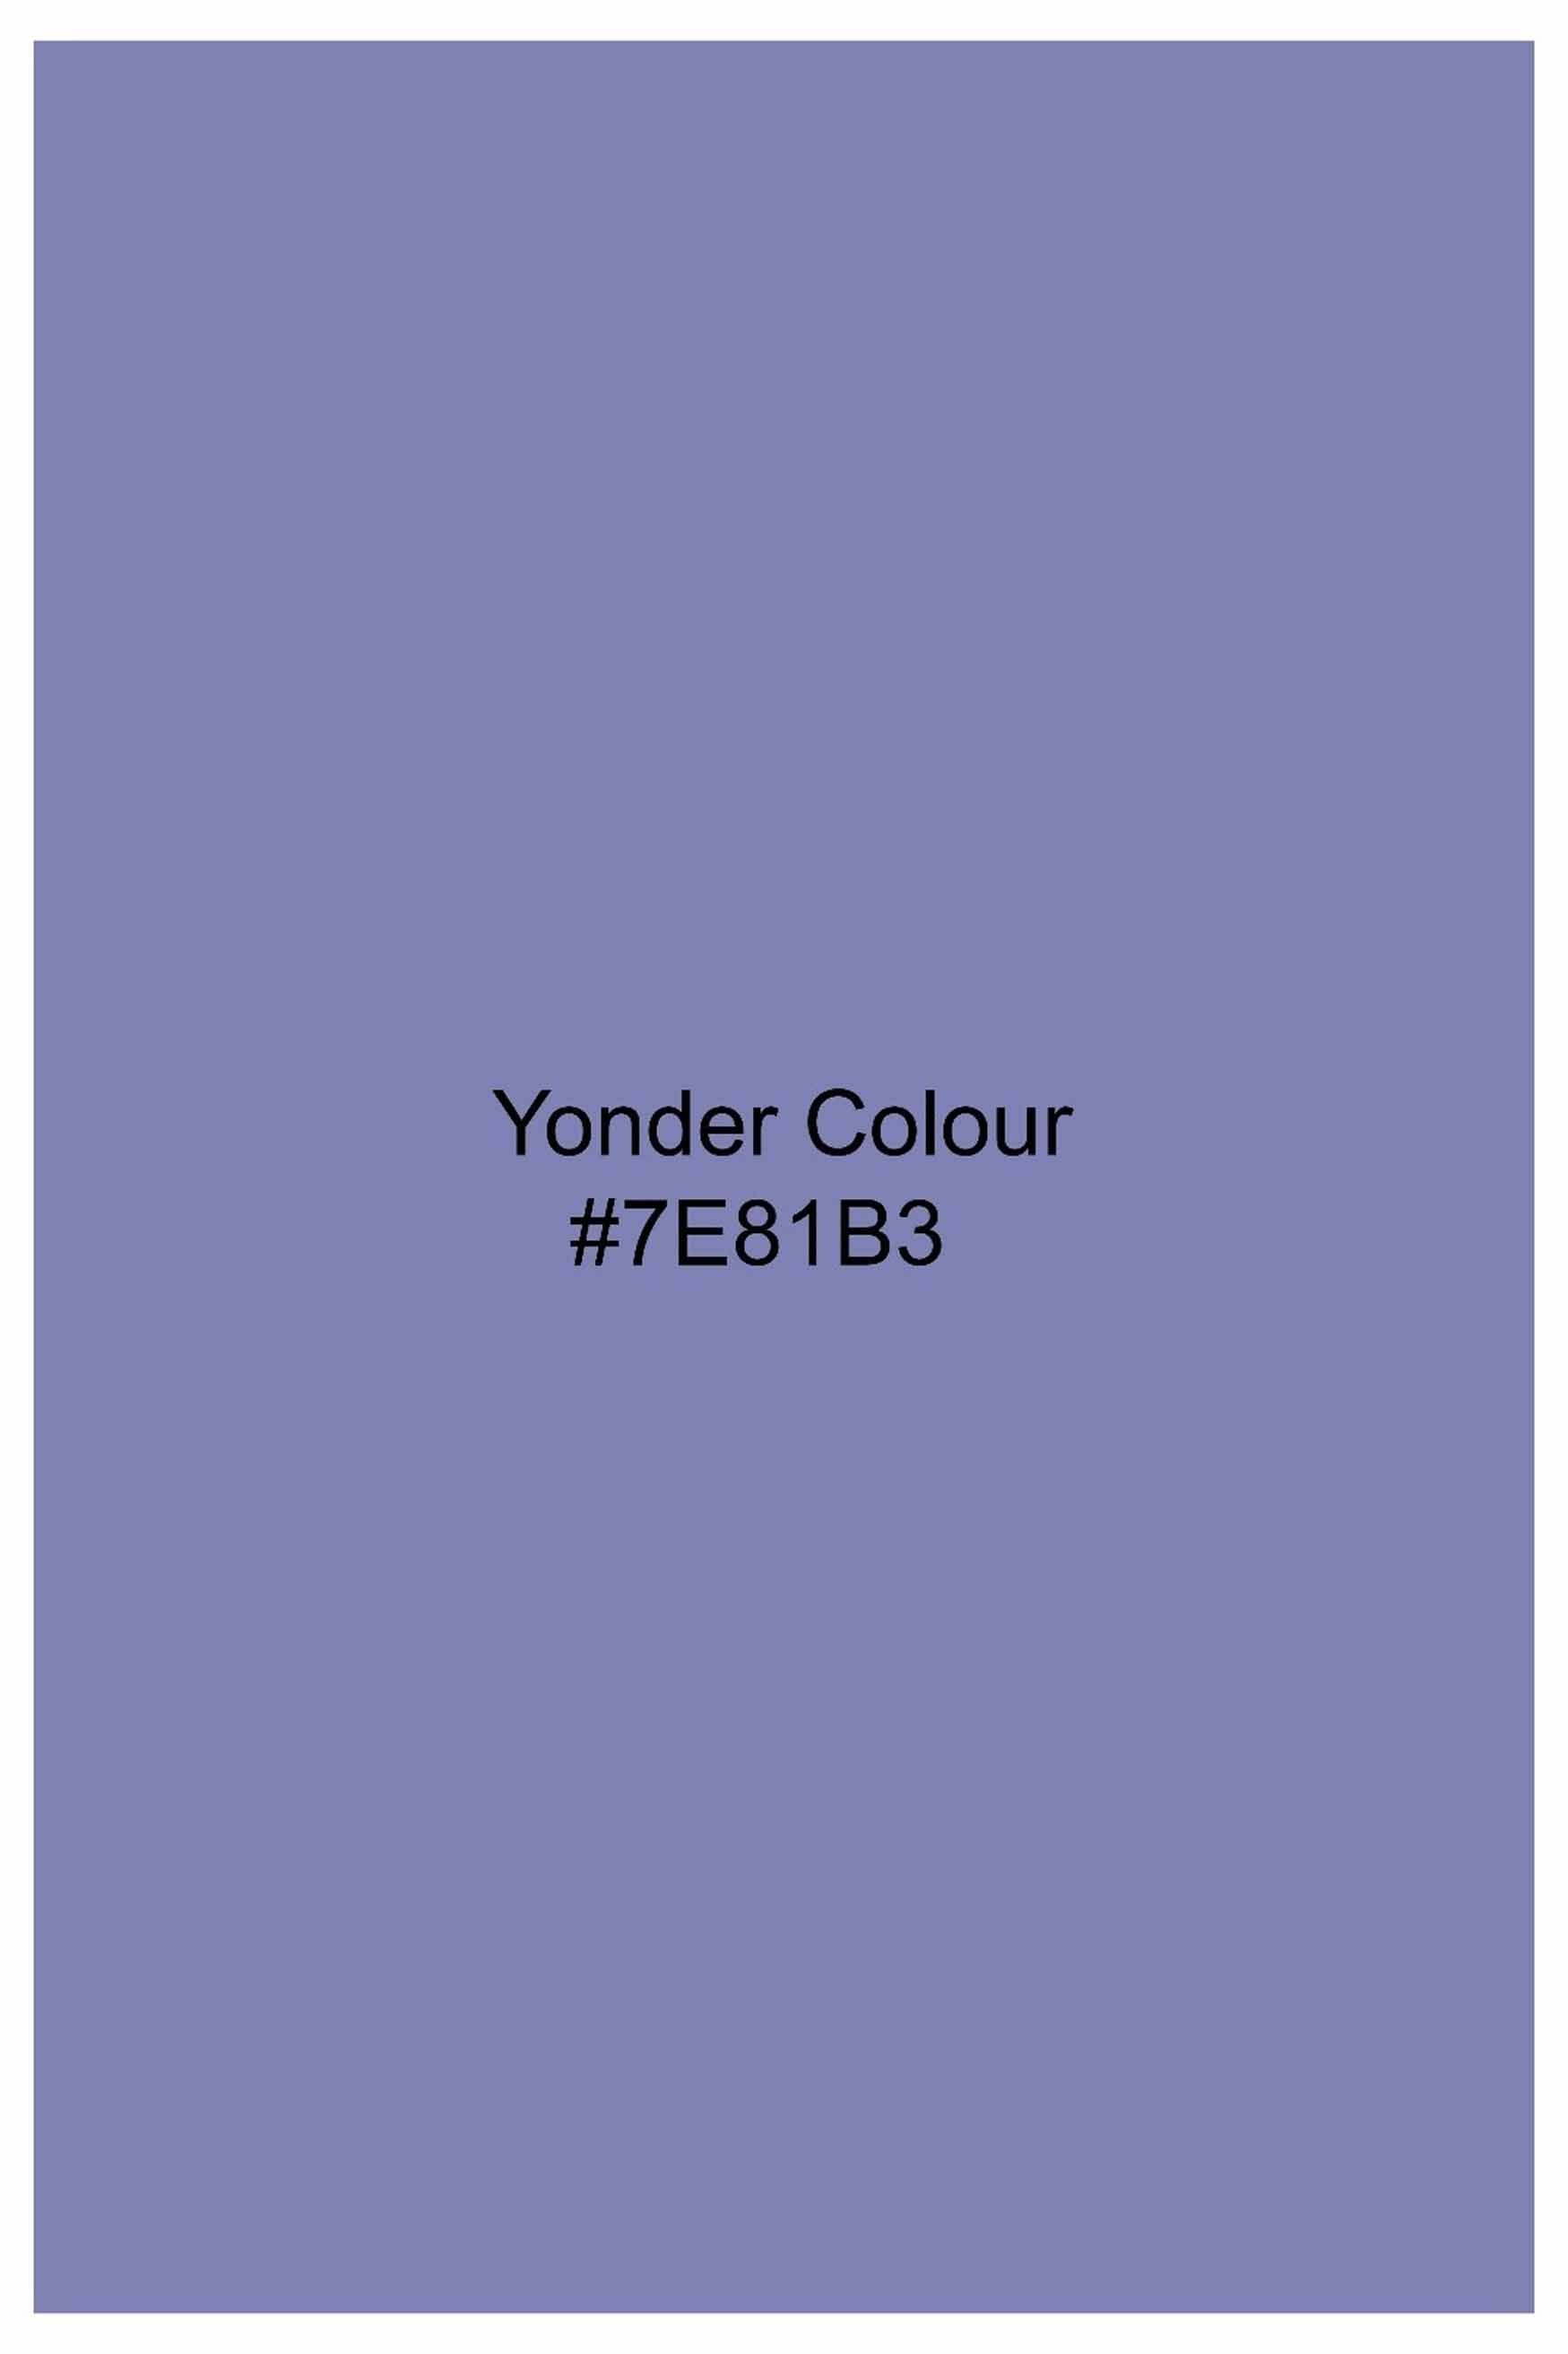 Yonder Blue Dobby Textured Premium Giza Cotton Shirt 11397-CA-38, 11397-CA-H-38, 11397-CA-39, 11397-CA-H-39, 11397-CA-40, 11397-CA-H-40, 11397-CA-42, 11397-CA-H-42, 11397-CA-44, 11397-CA-H-44, 11397-CA-46, 11397-CA-H-46, 11397-CA-48, 11397-CA-H-48, 11397-CA-50, 11397-CA-H-50, 11397-CA-52, 11397-CA-H-52